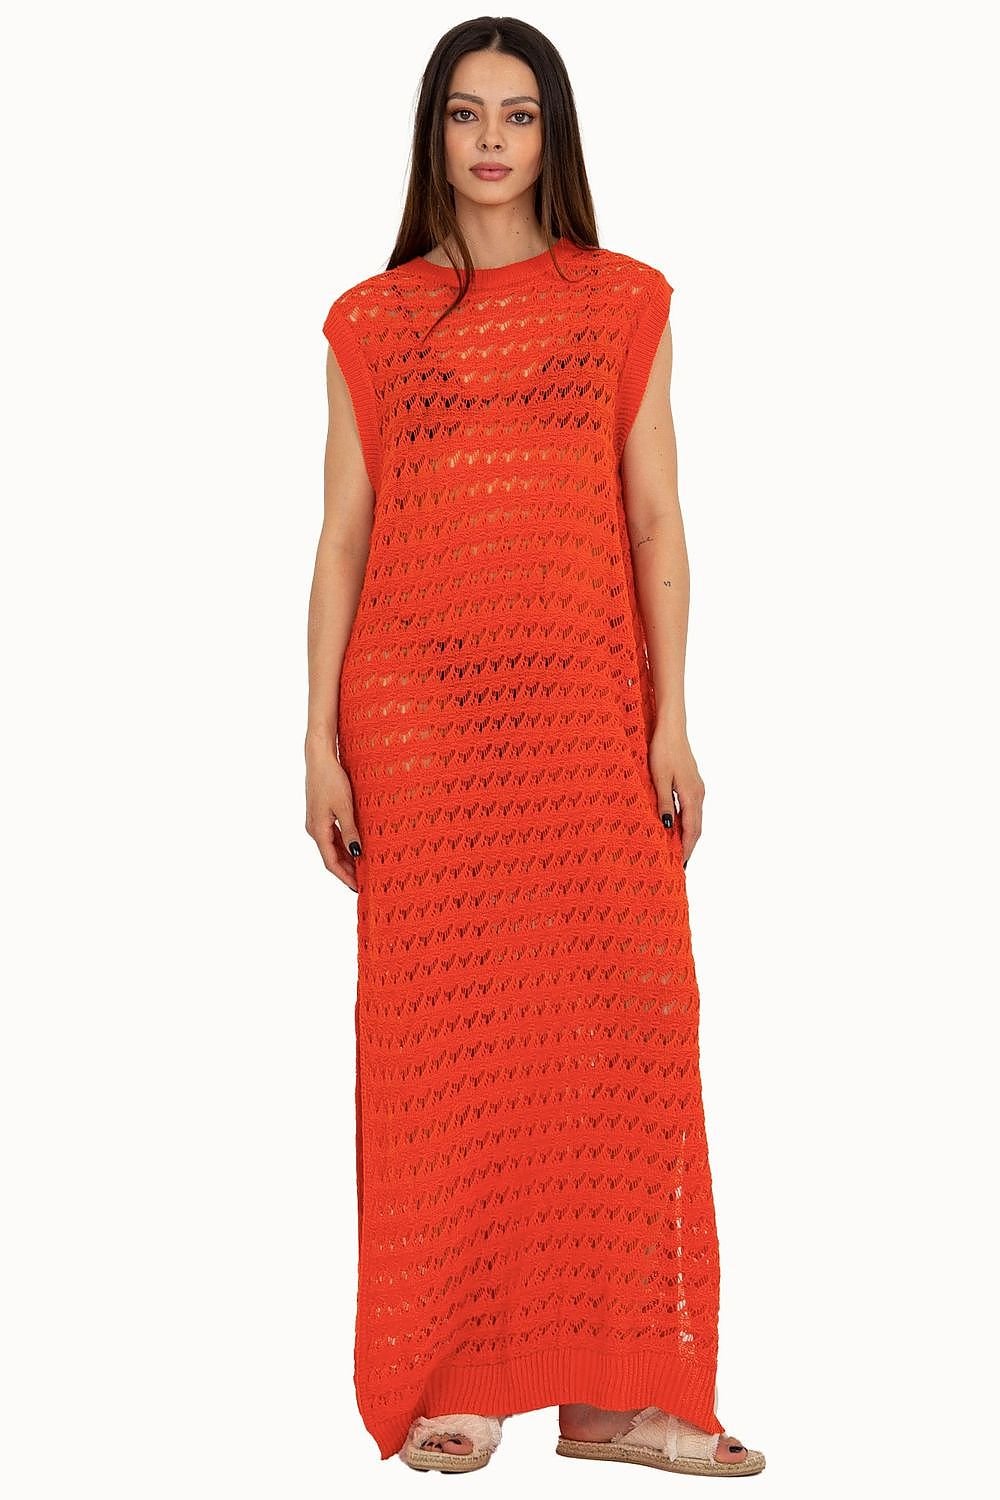 TEEK - Sleeveless Mesh Side Slits Beach Dress DRESS TEEK MH orange One Size 